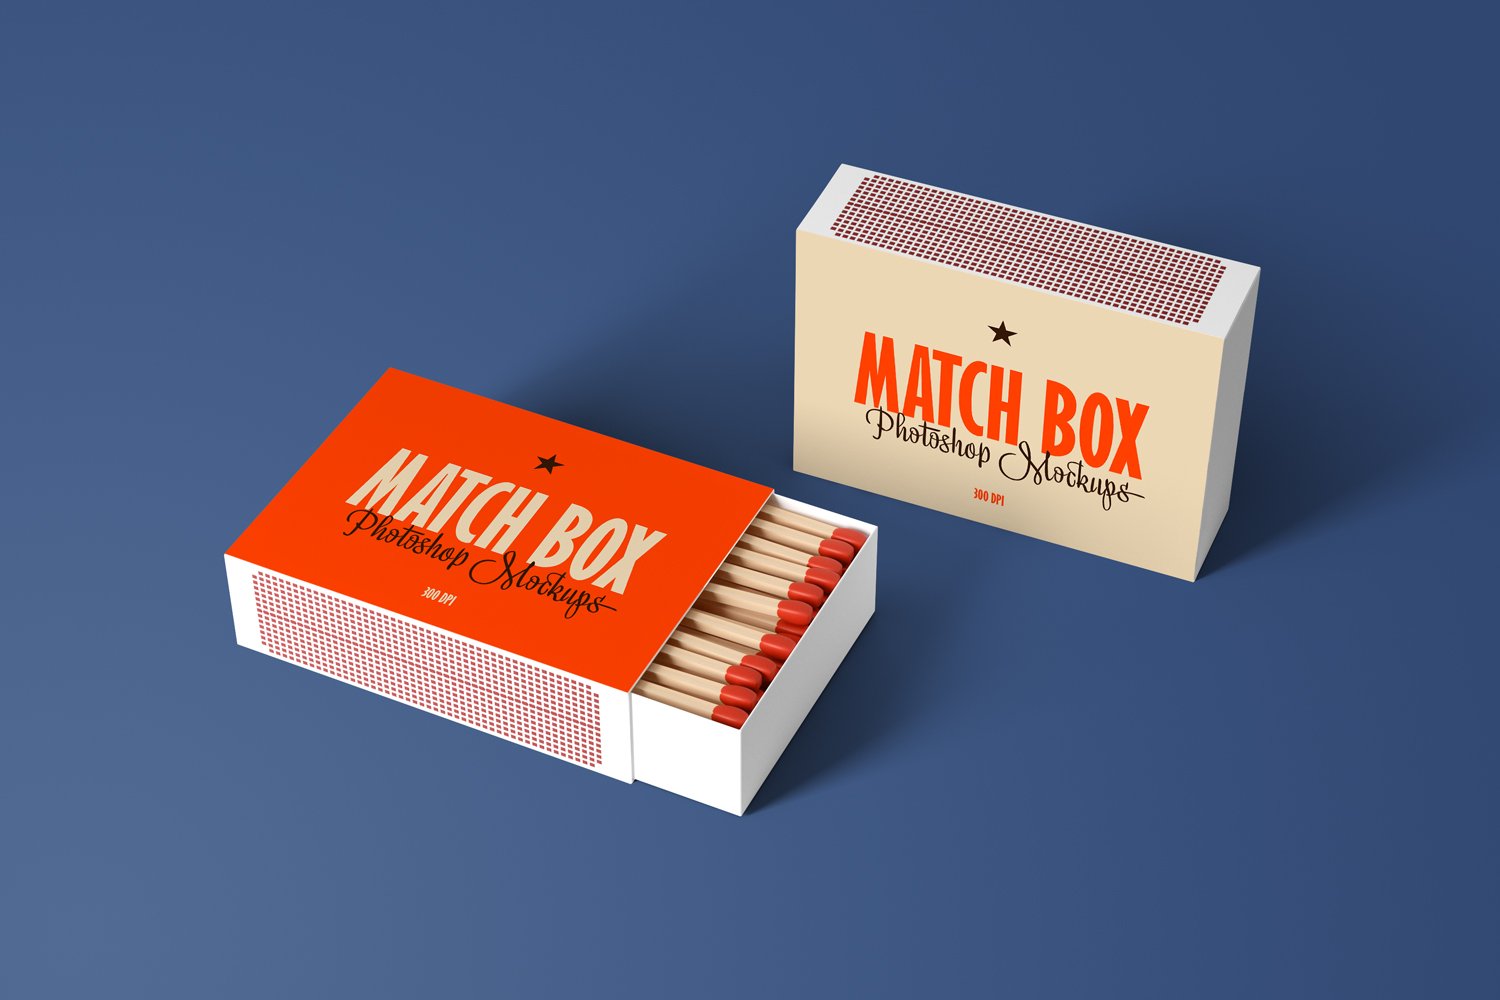 07 matches box photoshop mockups 79